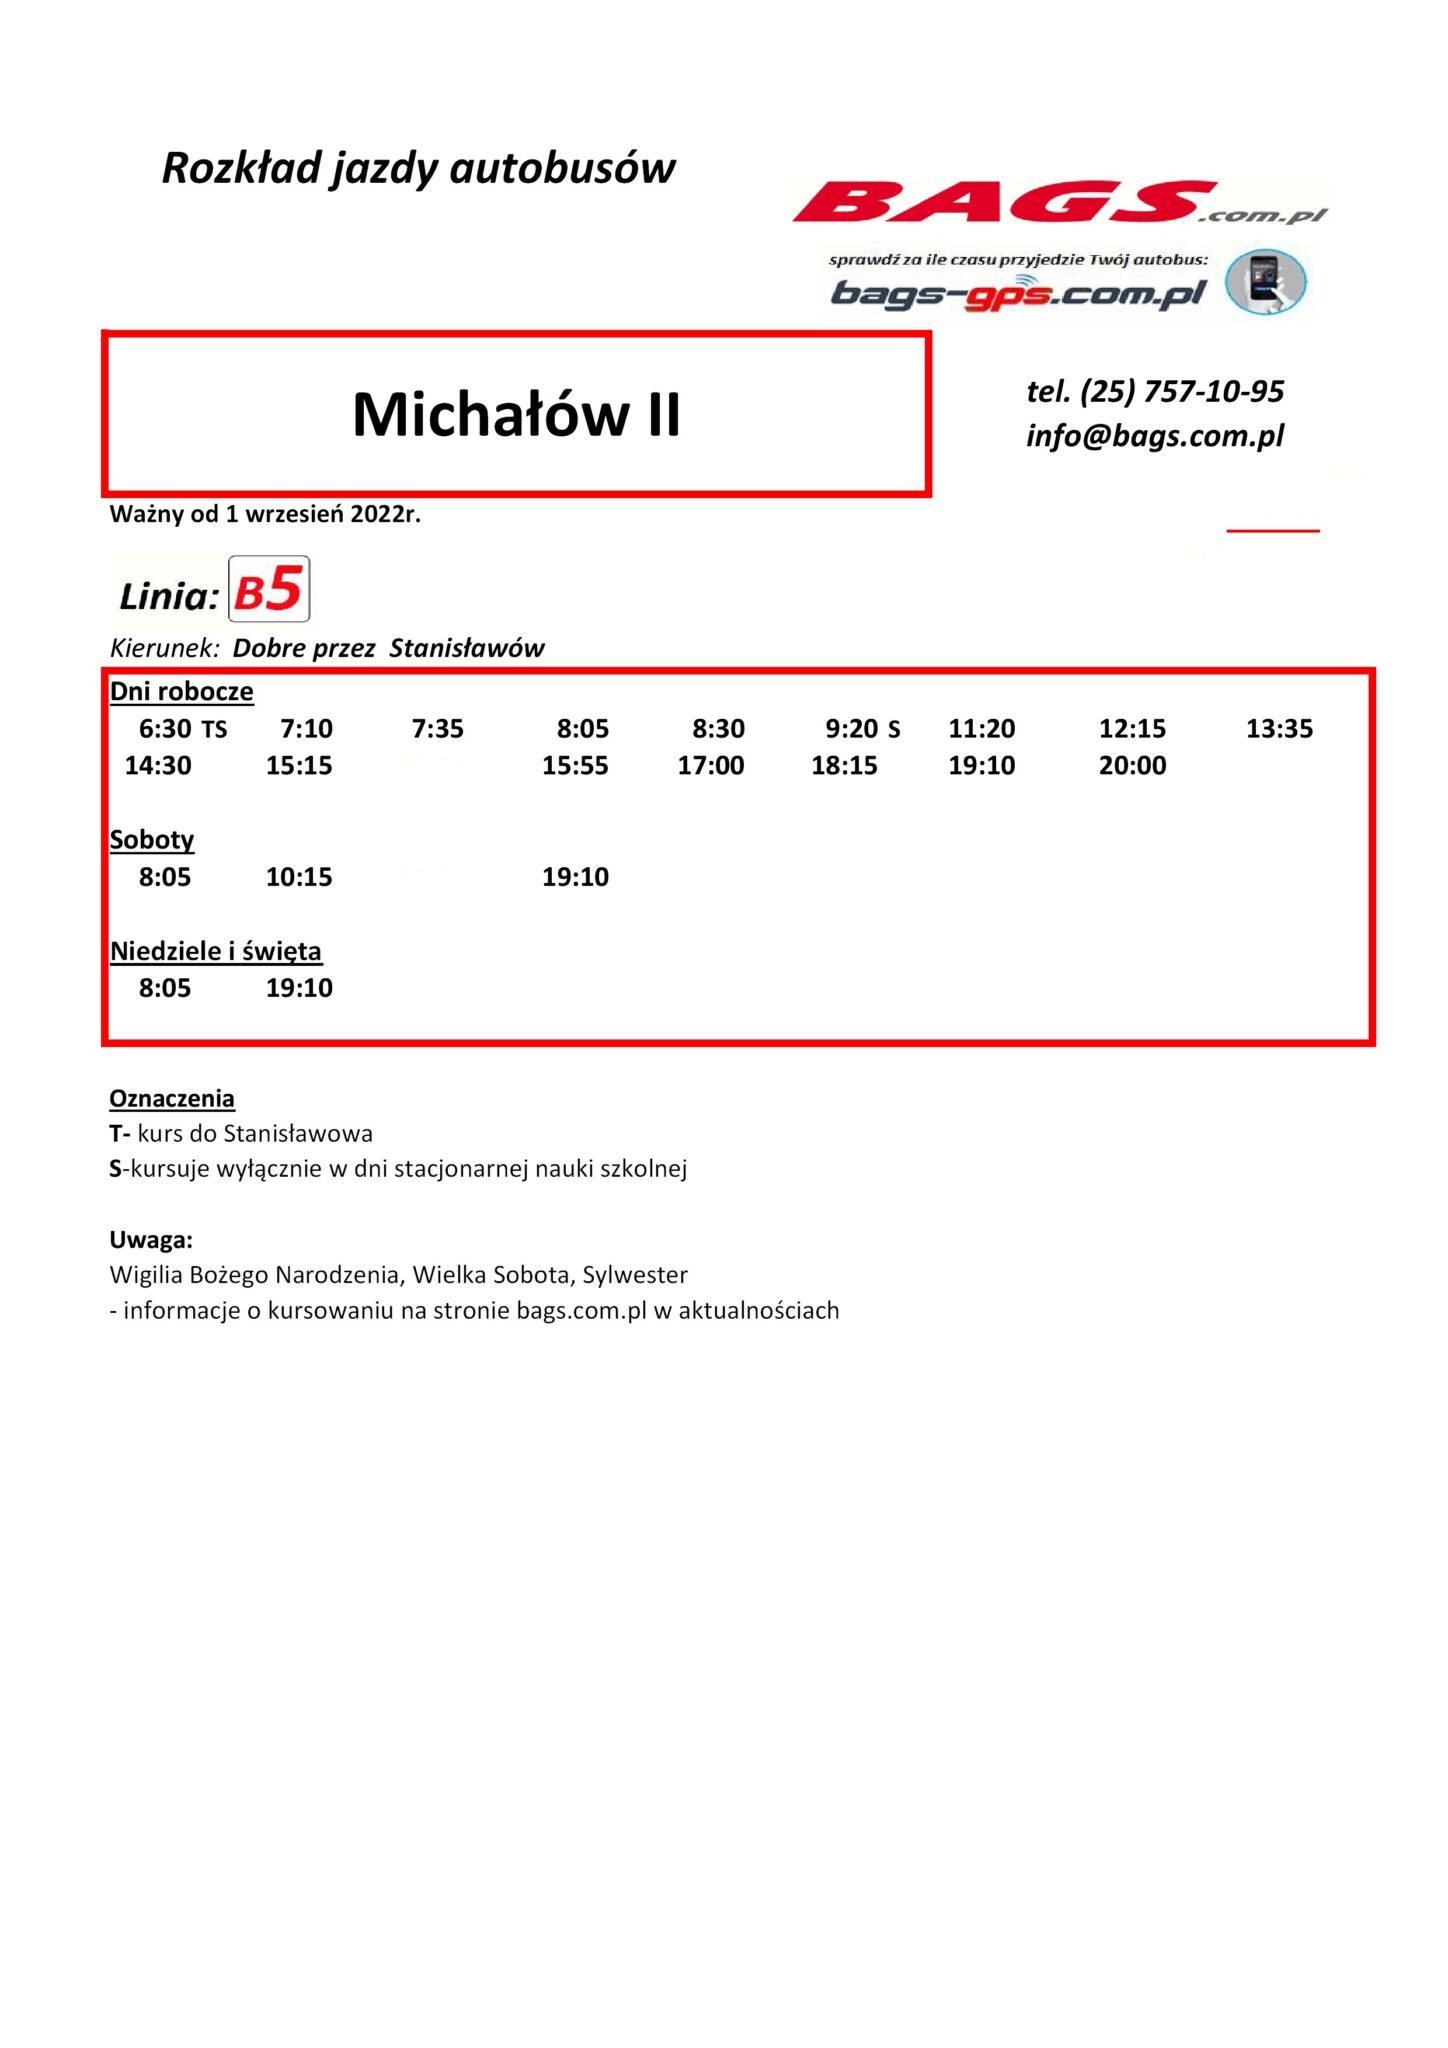 Michalow-II-1-1-1448x2048